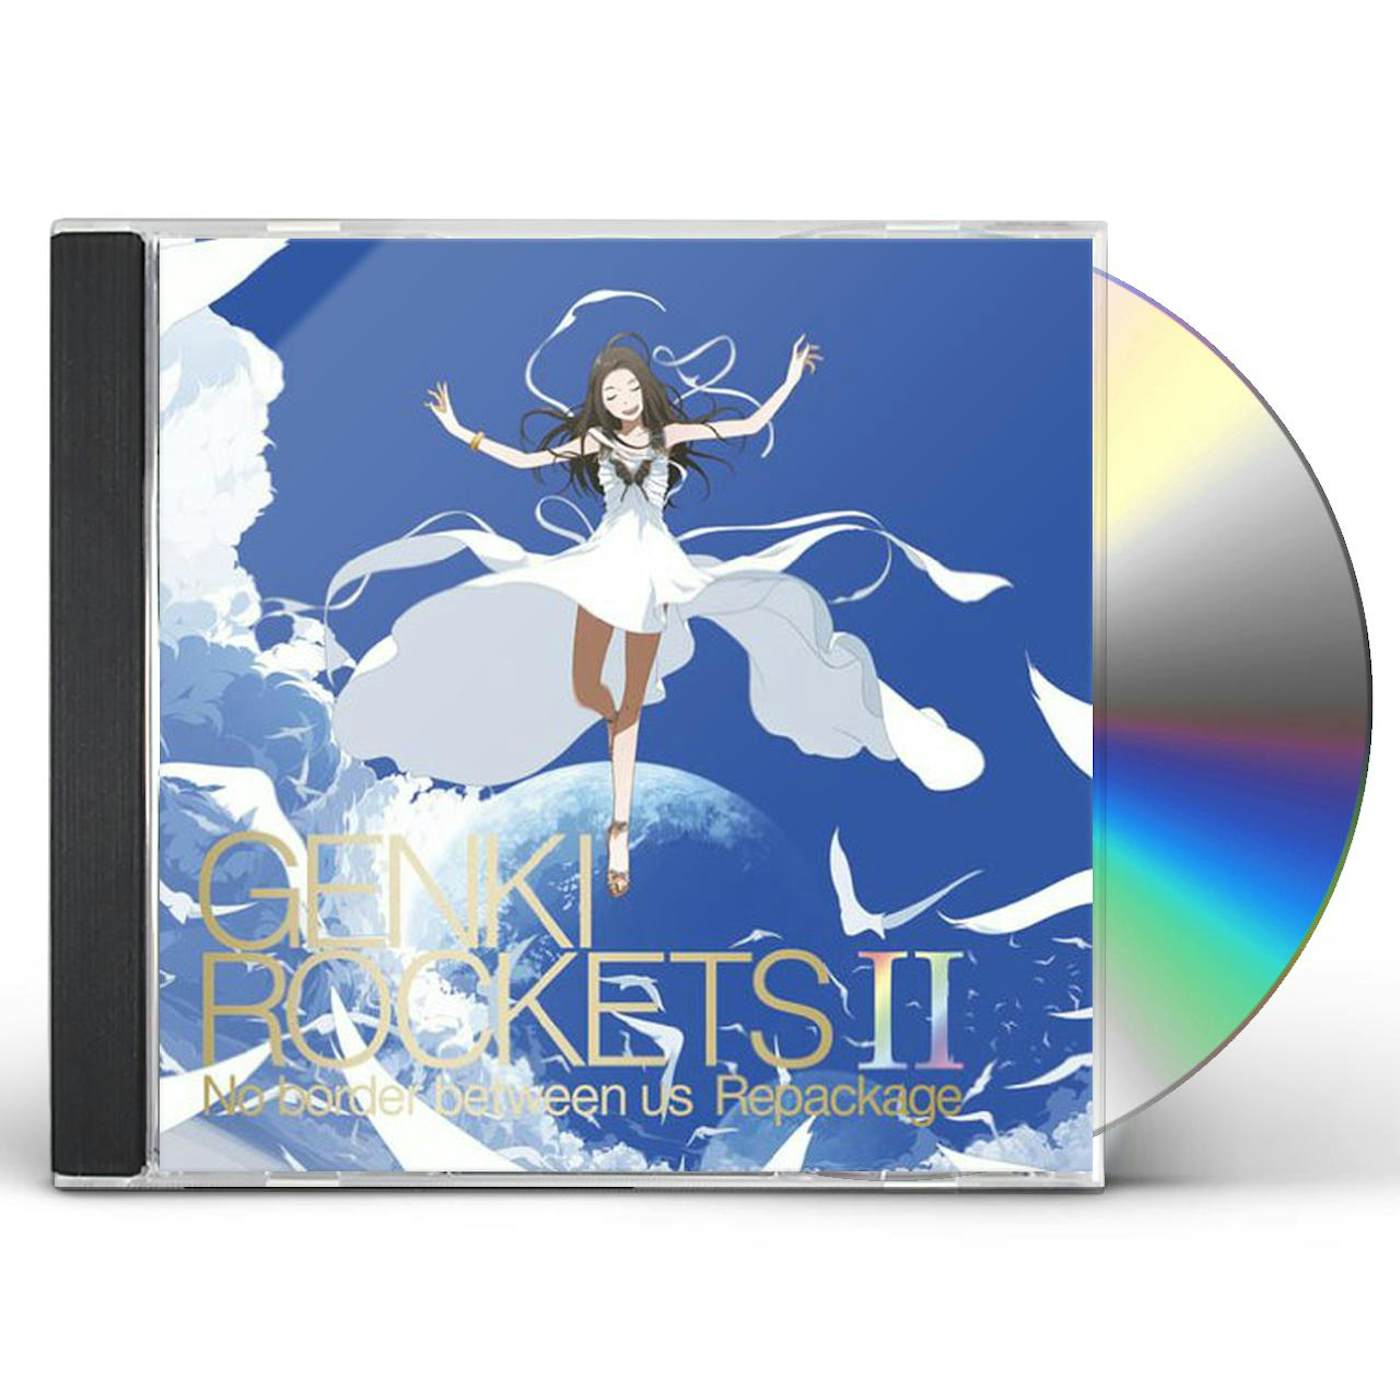 GENKI ROCKETS 2 -NO BORDER BETS- REPACKAGE CD